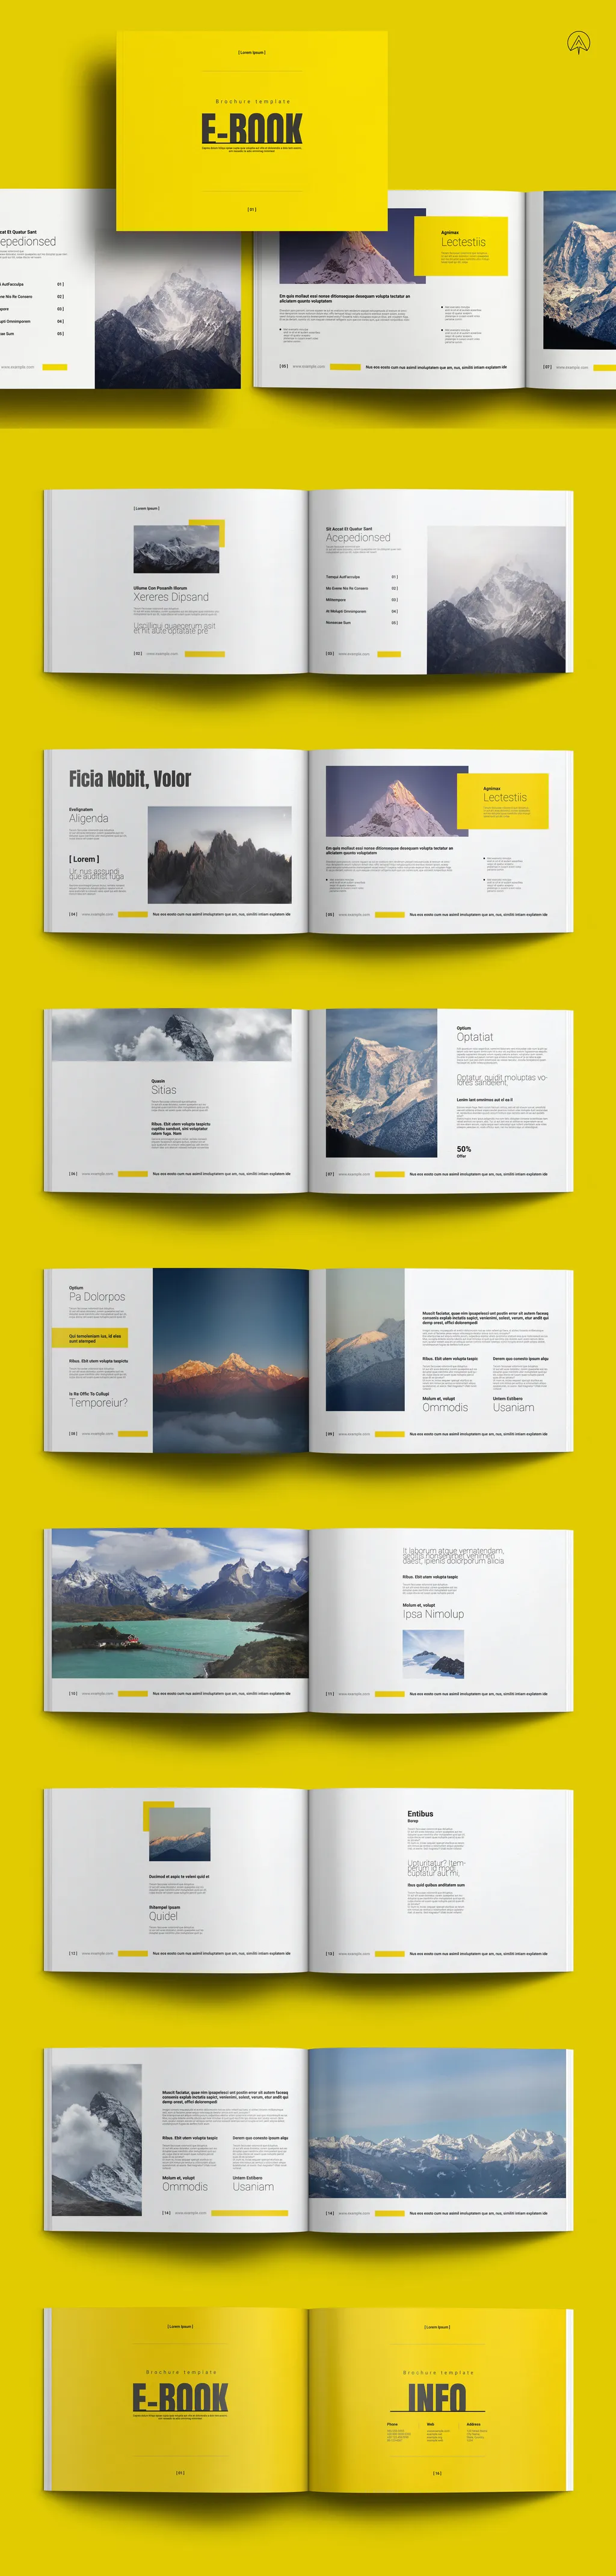 Adobestock - E-Book Landscape Brochure Template 717901072